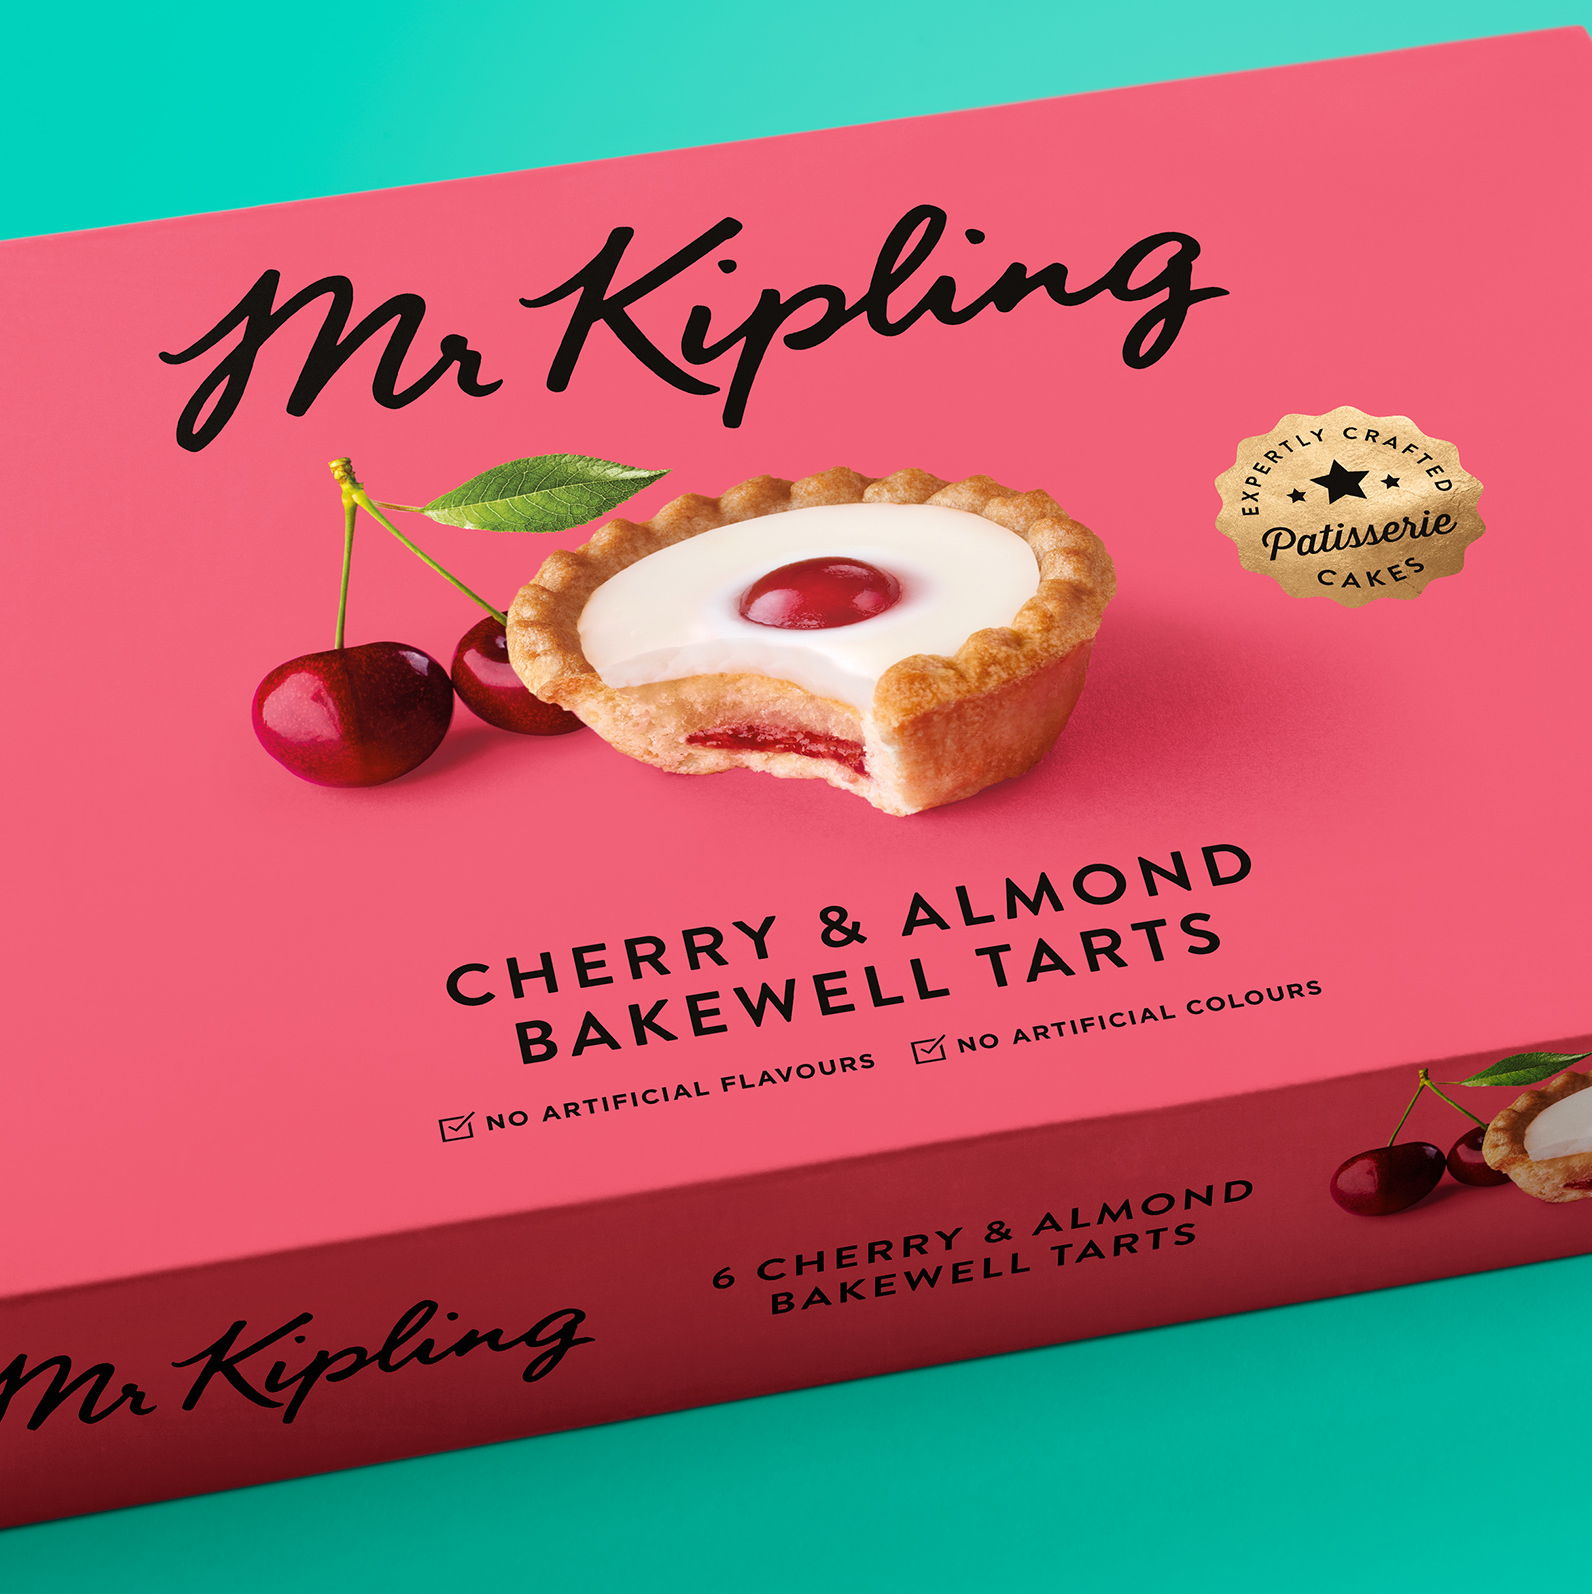 Редизайн, Дизайн упаковки, Robot Food, Mr Kipling Hits international Shelves With A Tantalising Redesign By Robot Food